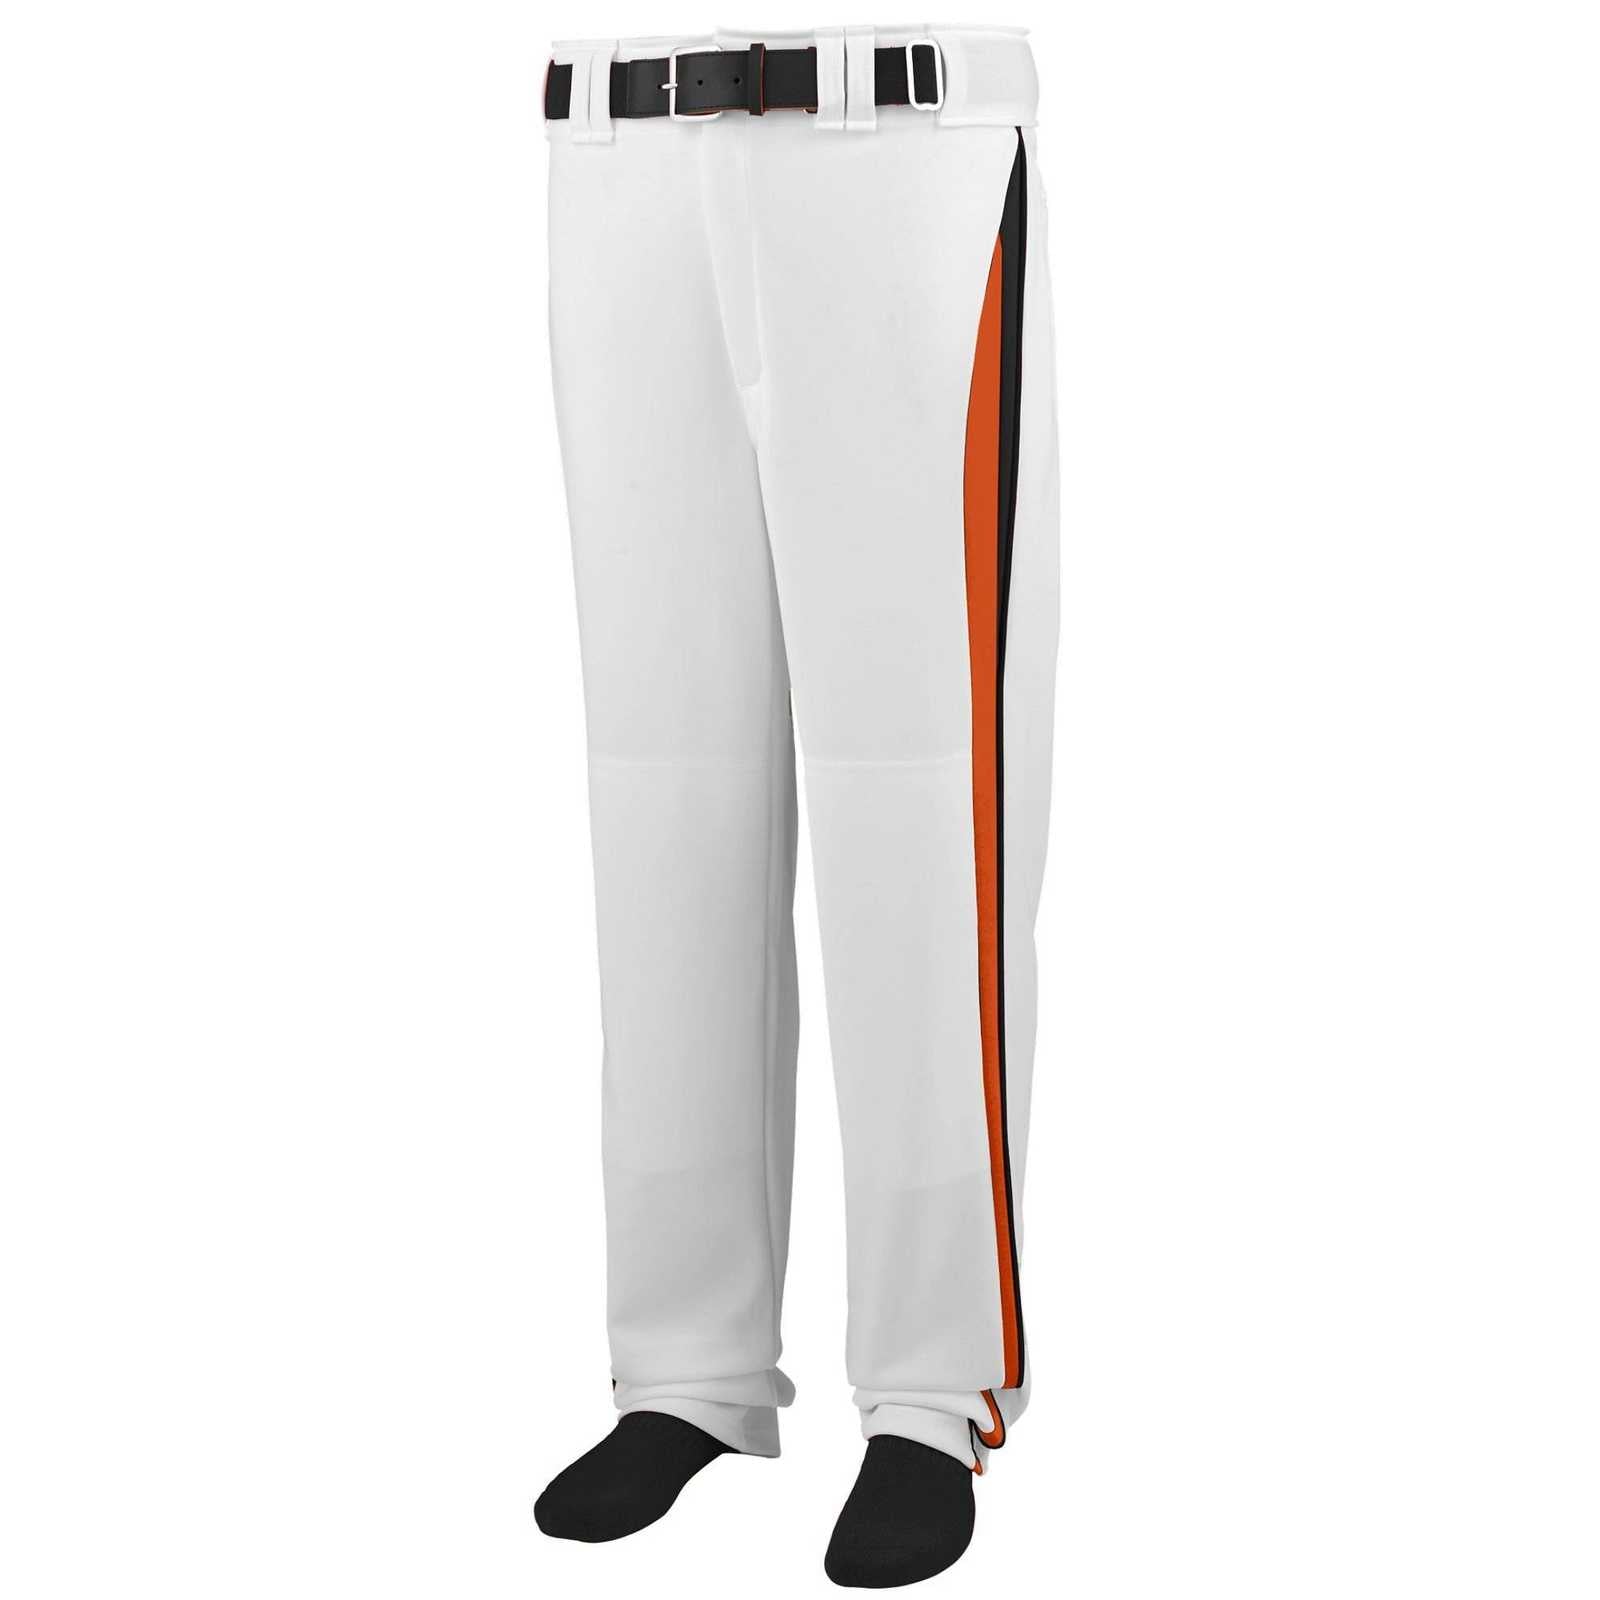 Augusta 1475 Line Drive Baseball Softball Pant - White Orange Black - HIT a Double